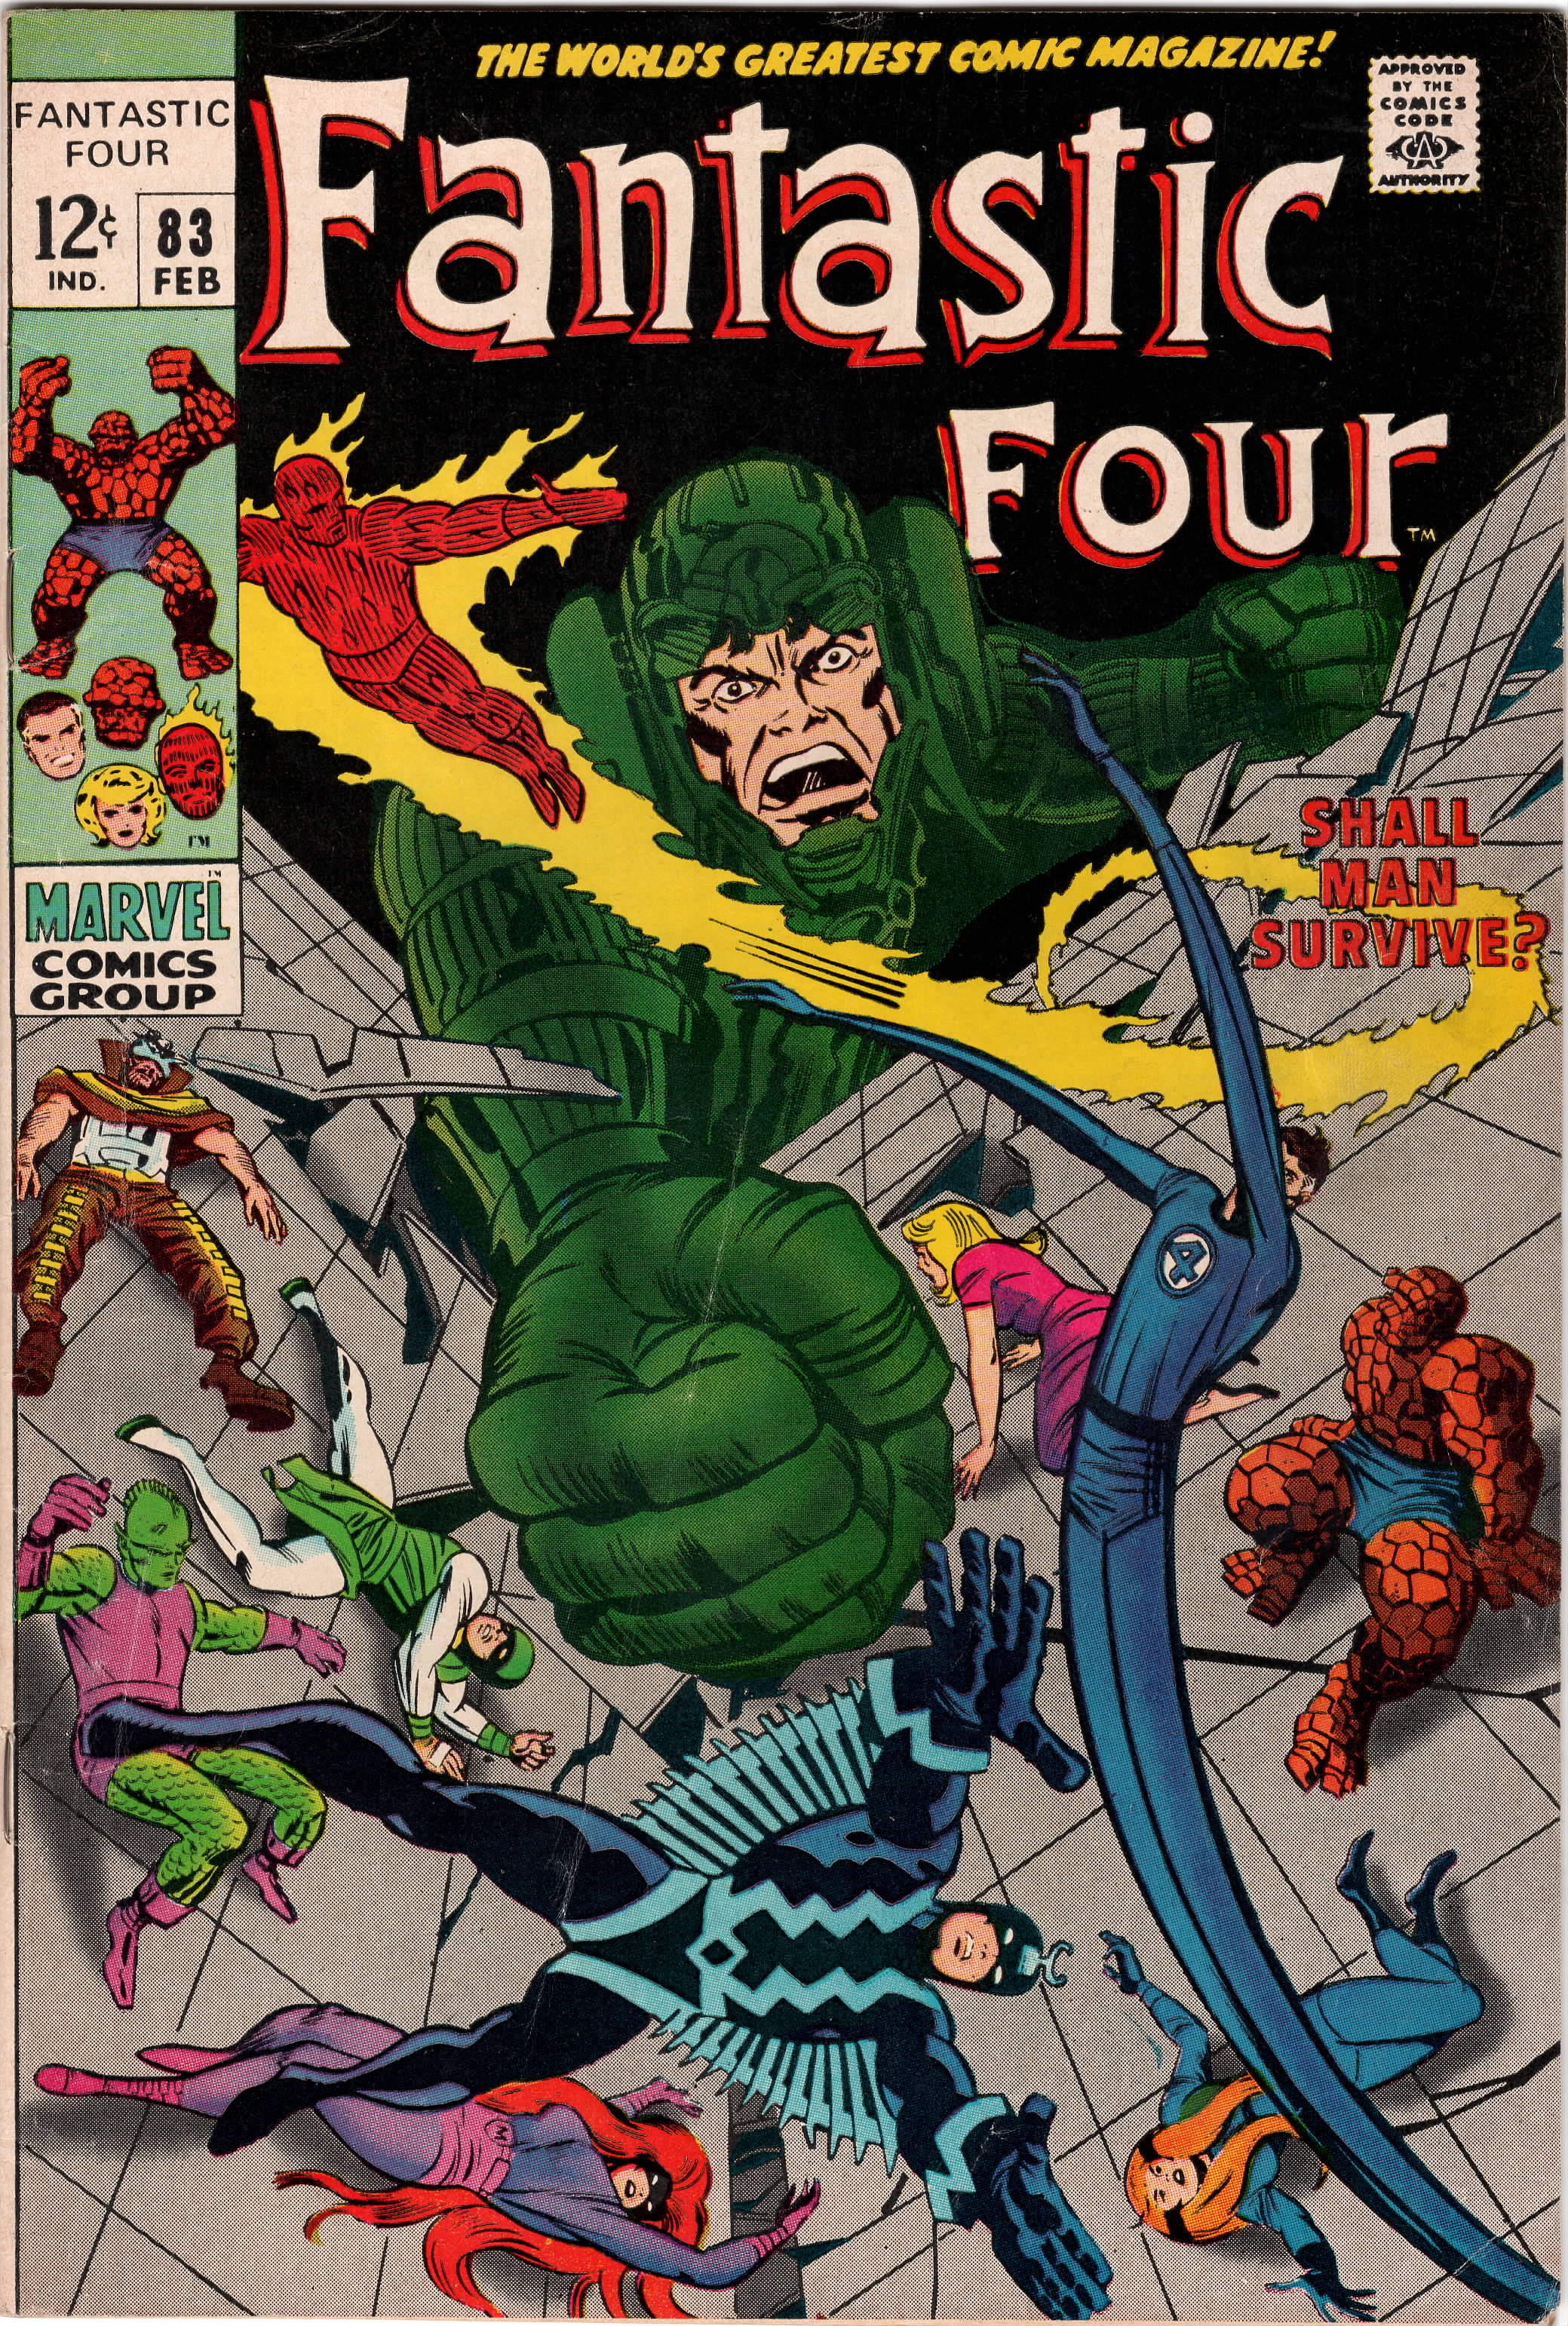 Fantastic Four #083